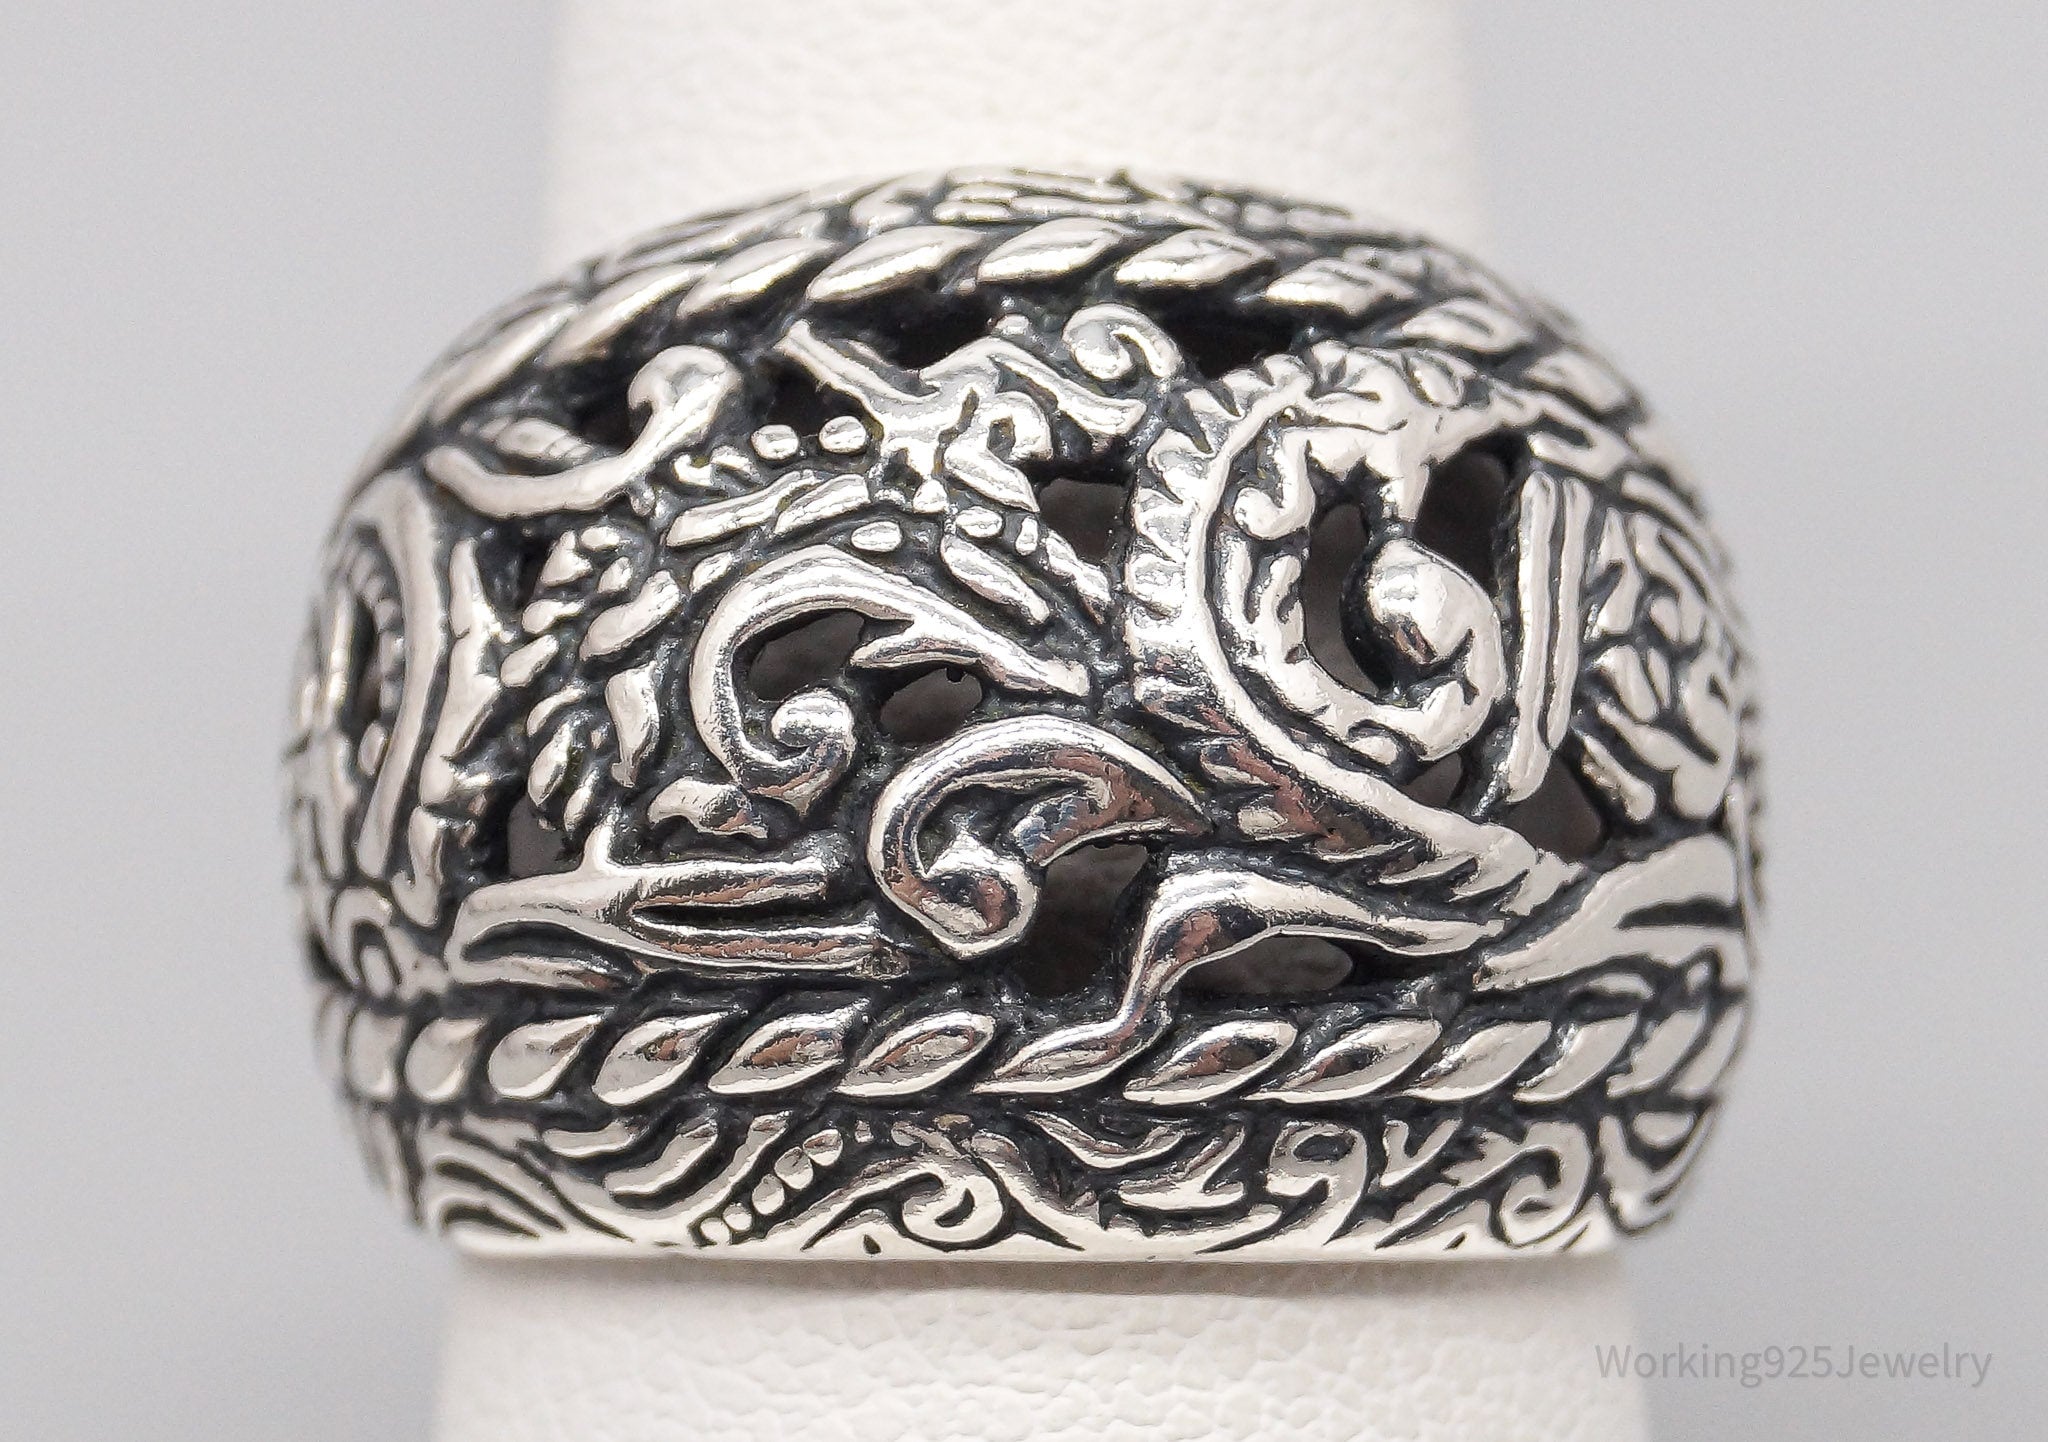 Vintage Native Designer Carolyn Pollack Relios Sterling Silver Ring - Size 7.25